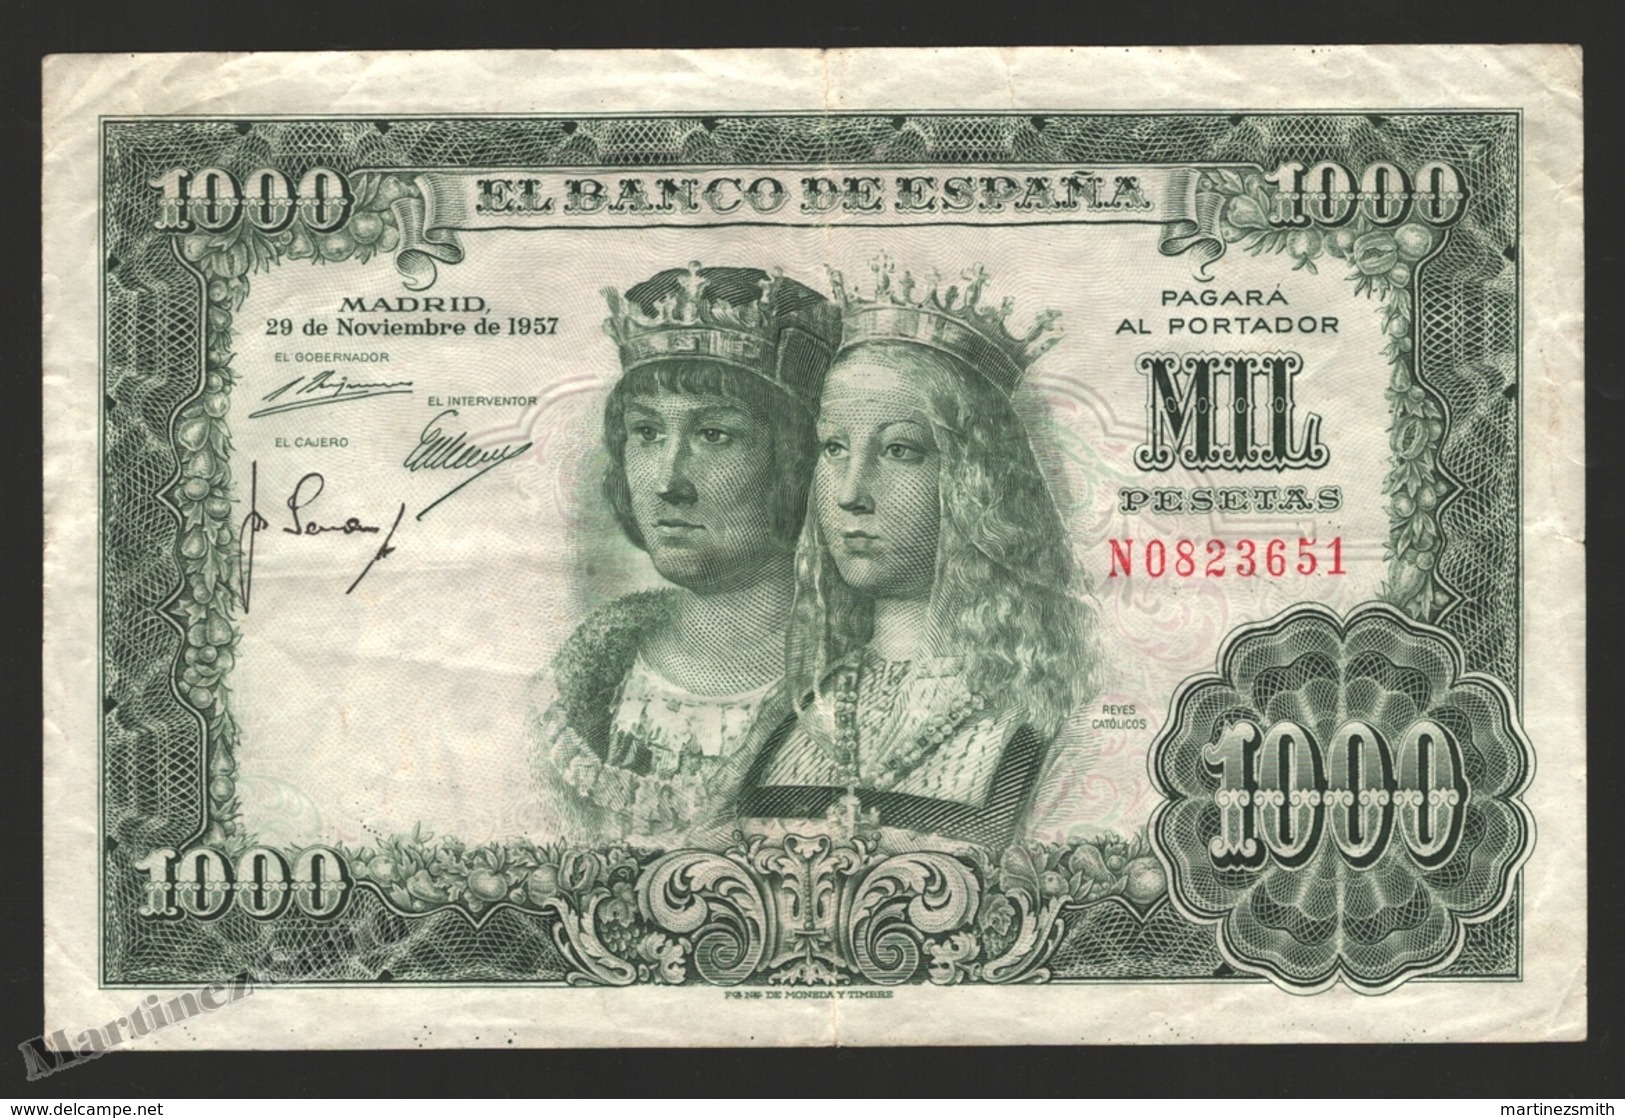 Banknote Spain -  1000 Pesetas – November 1957 – Reyes Católicos - Condition G - Pick 149a - 1000 Pesetas